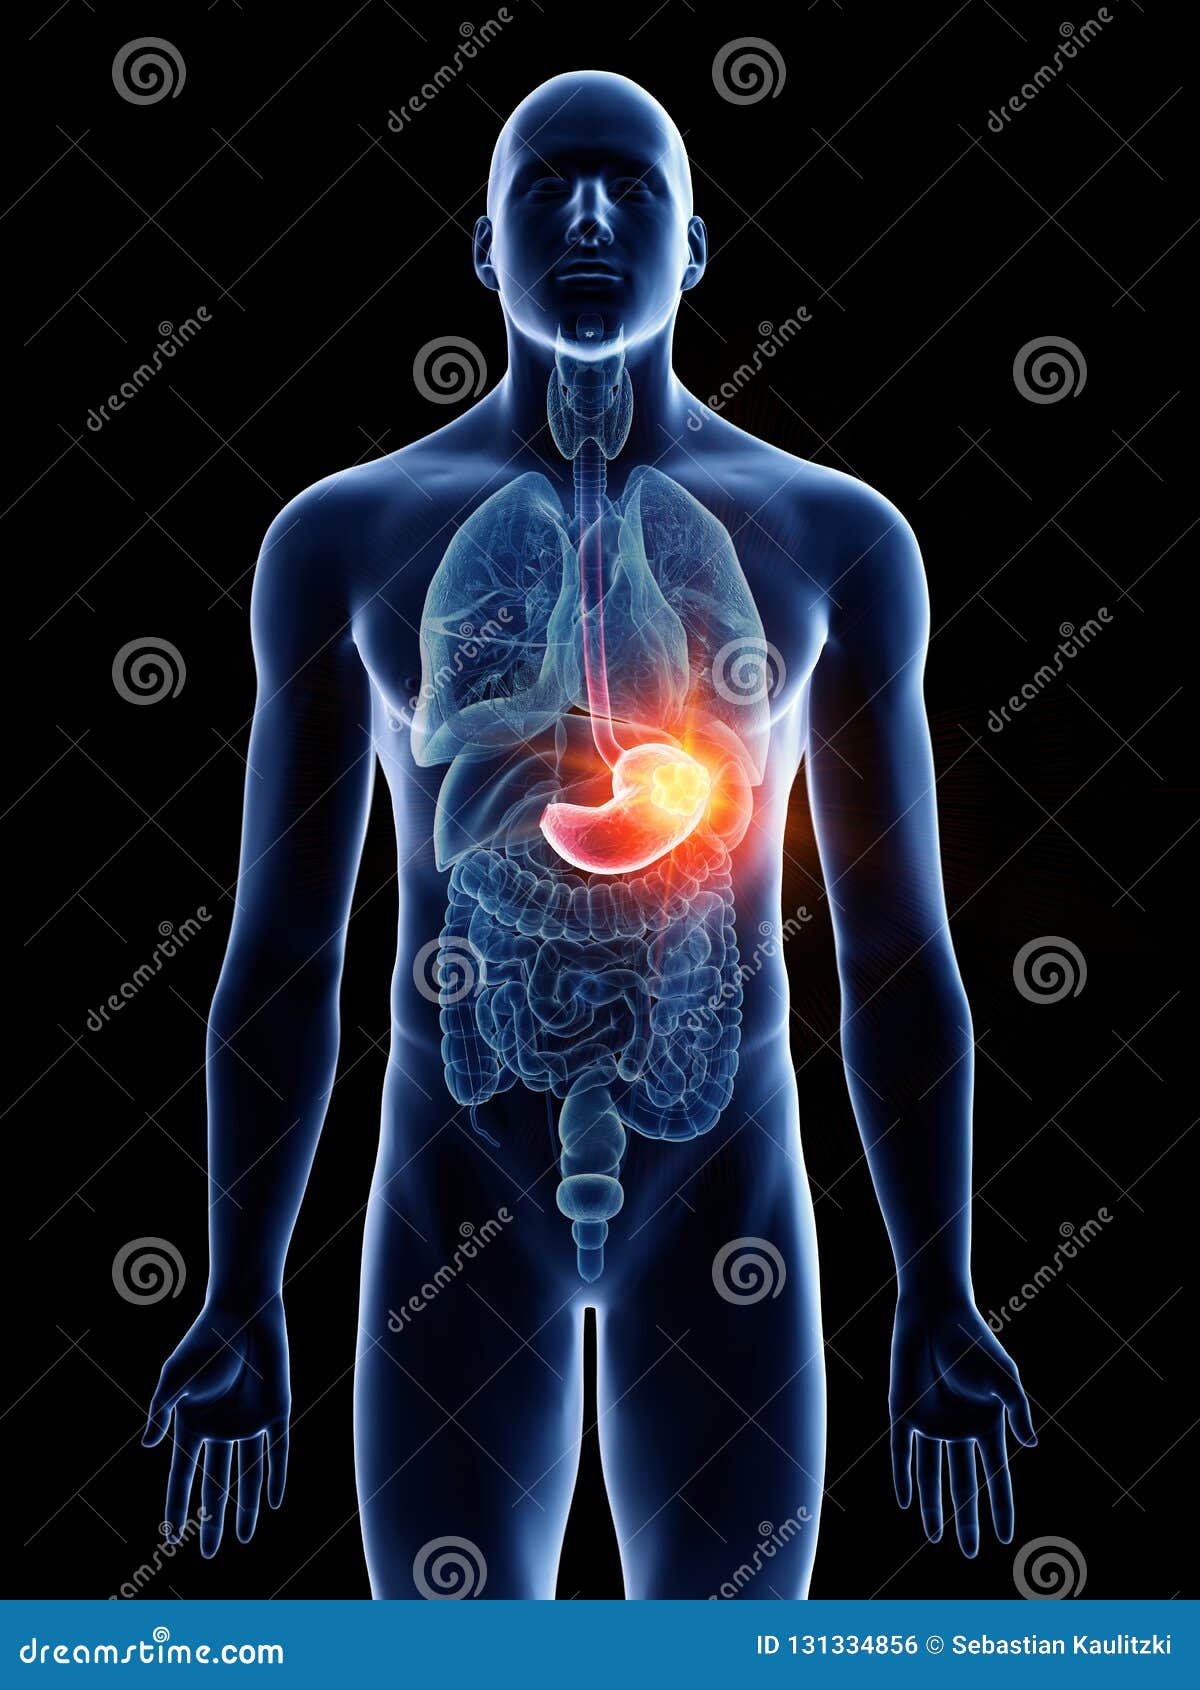 A mans stomach cancer stock illustration. Illustration of frontal ...